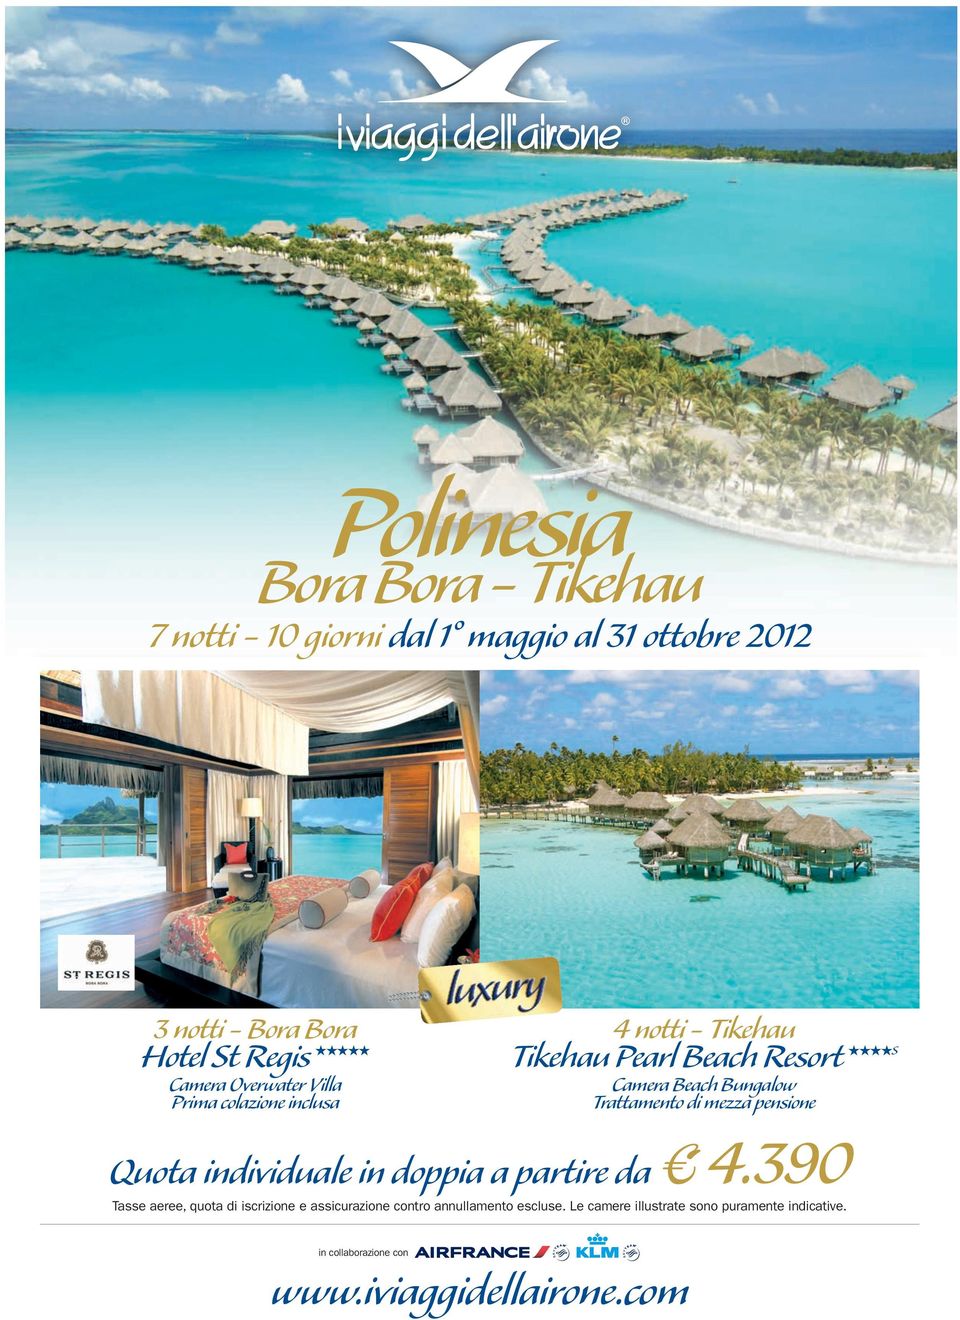 colazione inclusa 4 notti - Tikehau Tikehau Pearl Beach Resort HHHHS Camera